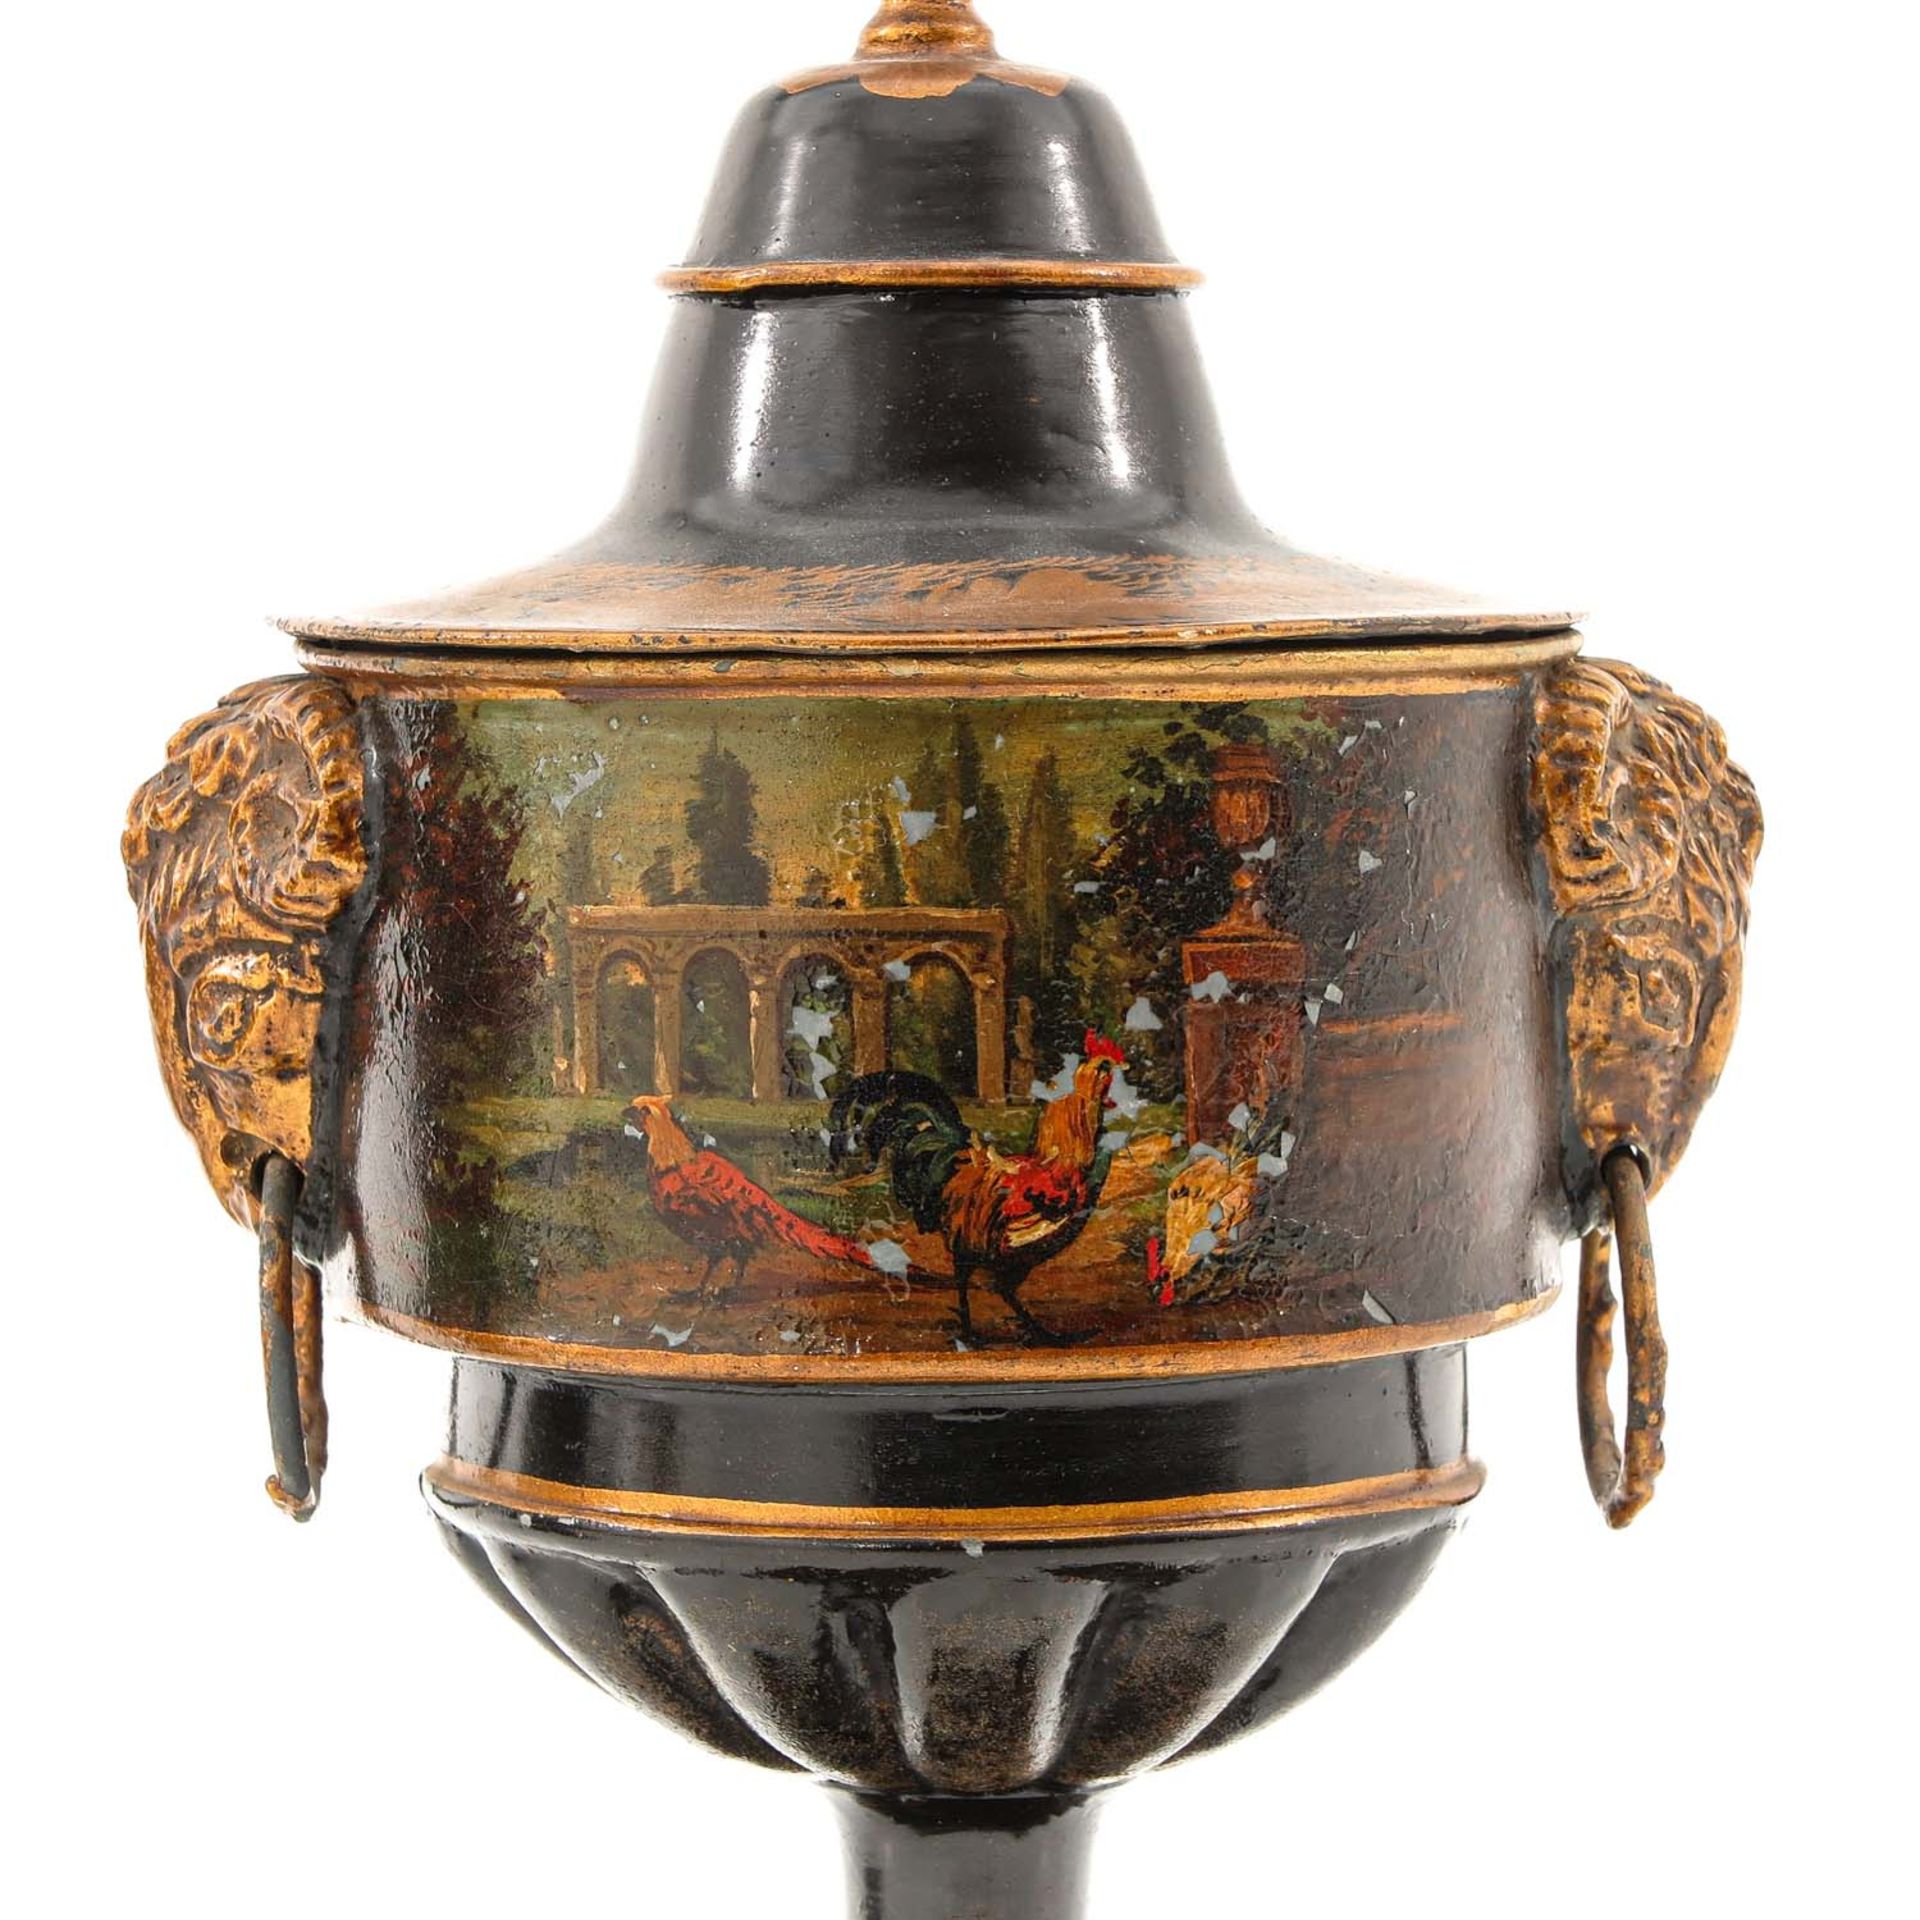 A Pair of Dutch 18th Century Chestnut Vases - Image 8 of 9